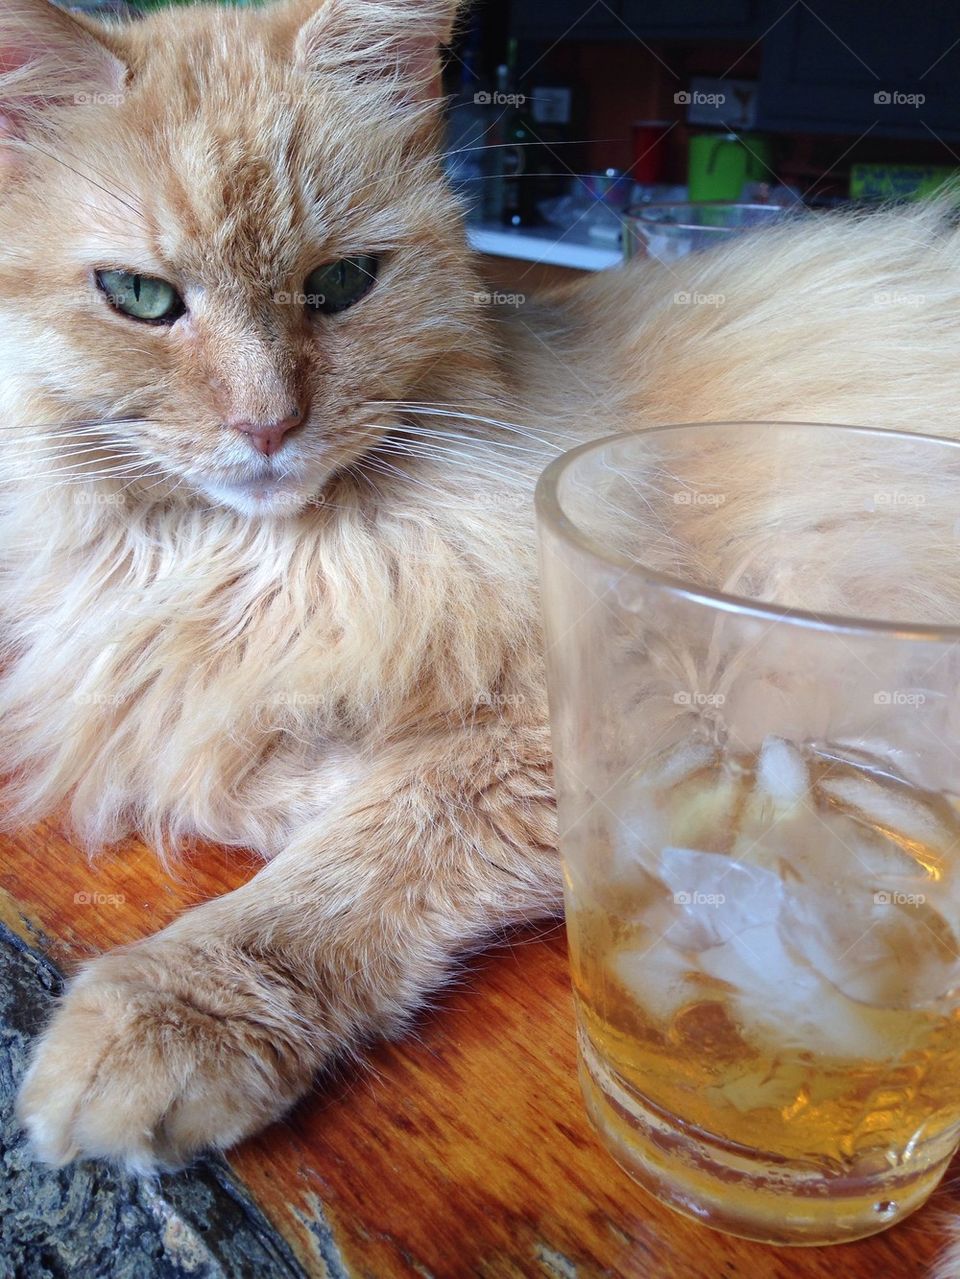 Cat with scotch